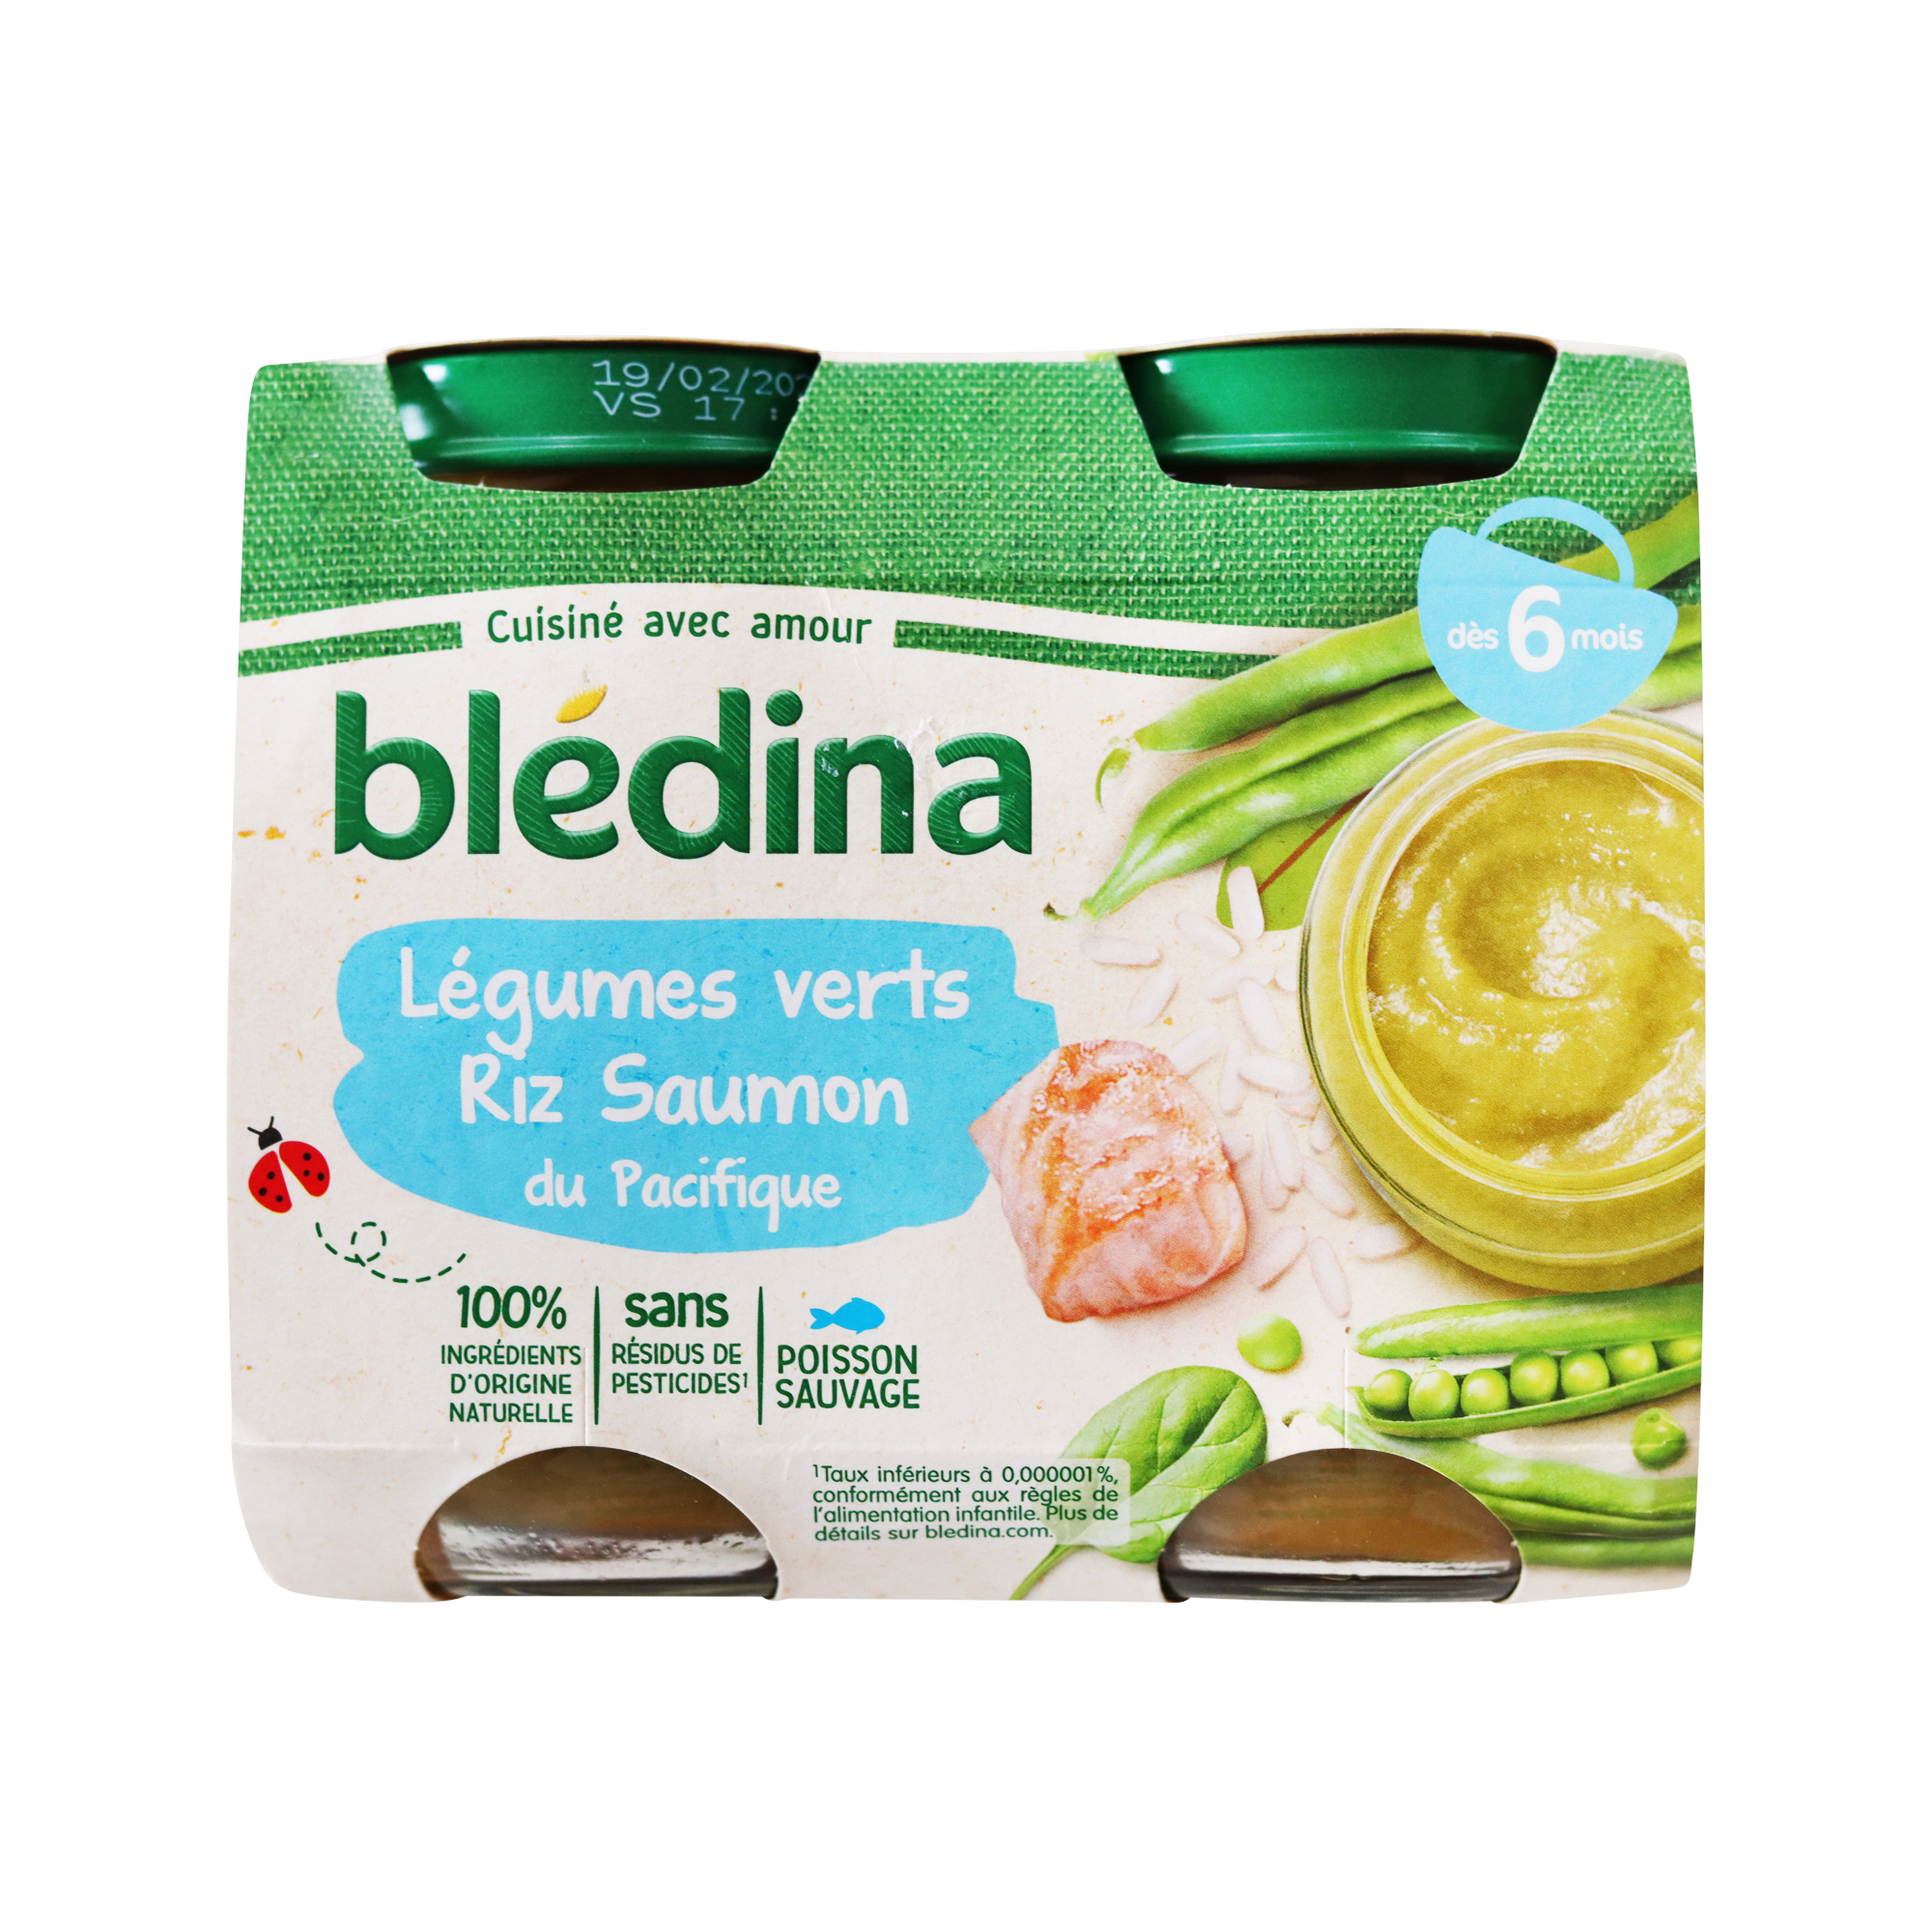 Bledina Green Vegetables, Rice & Salmon 6M (2x200g)